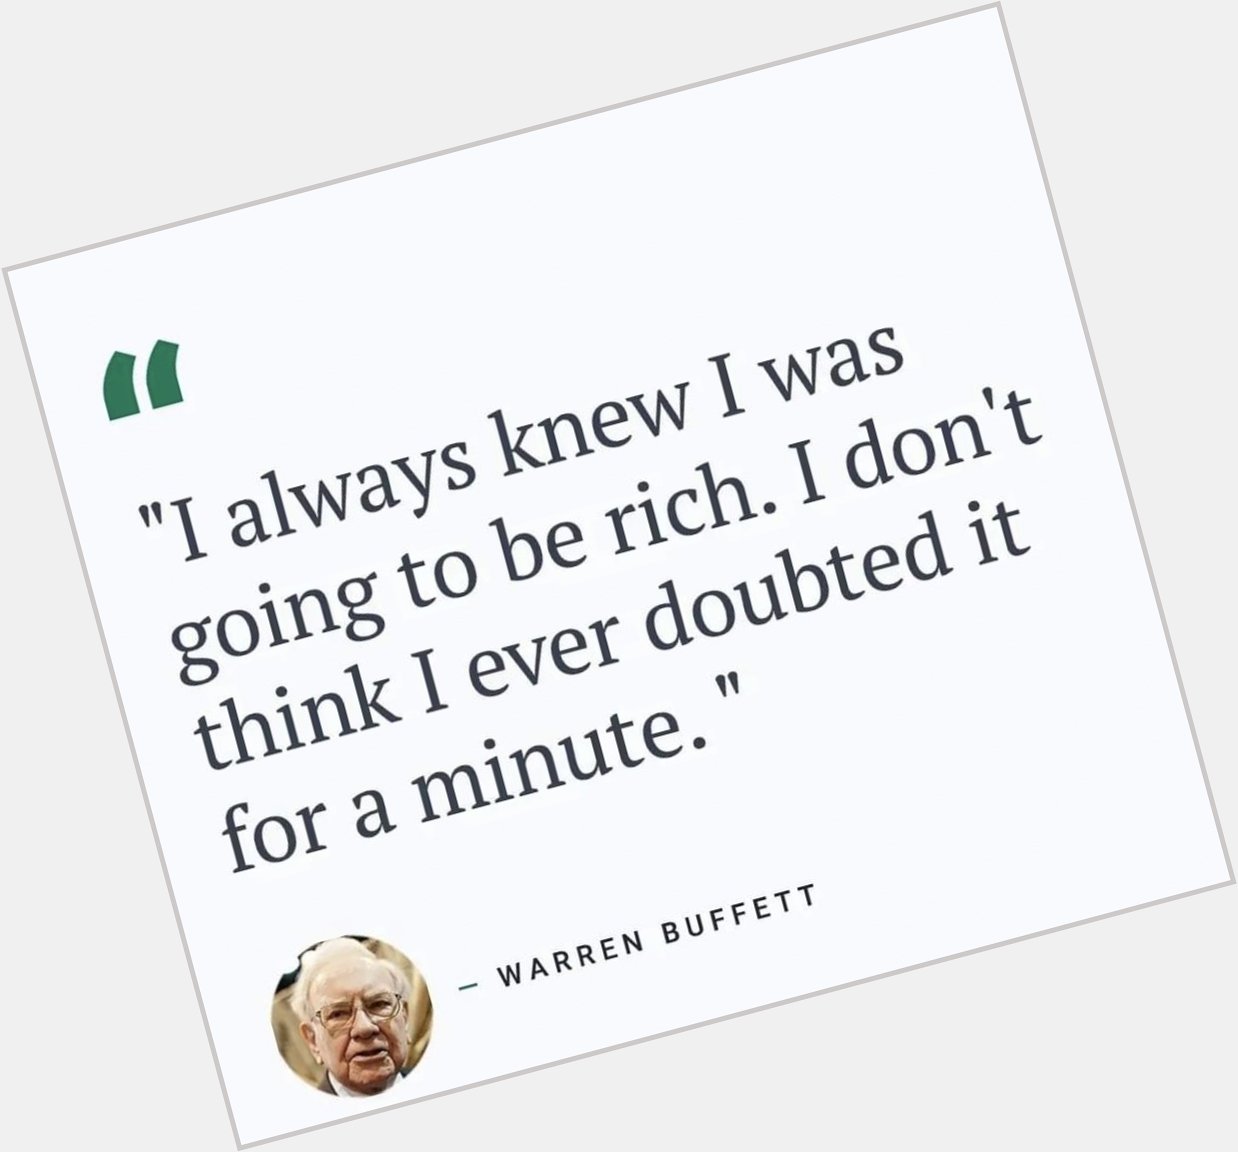 Be bold. Be confident. 

Happy 91st birthday to Warren Buffett! 